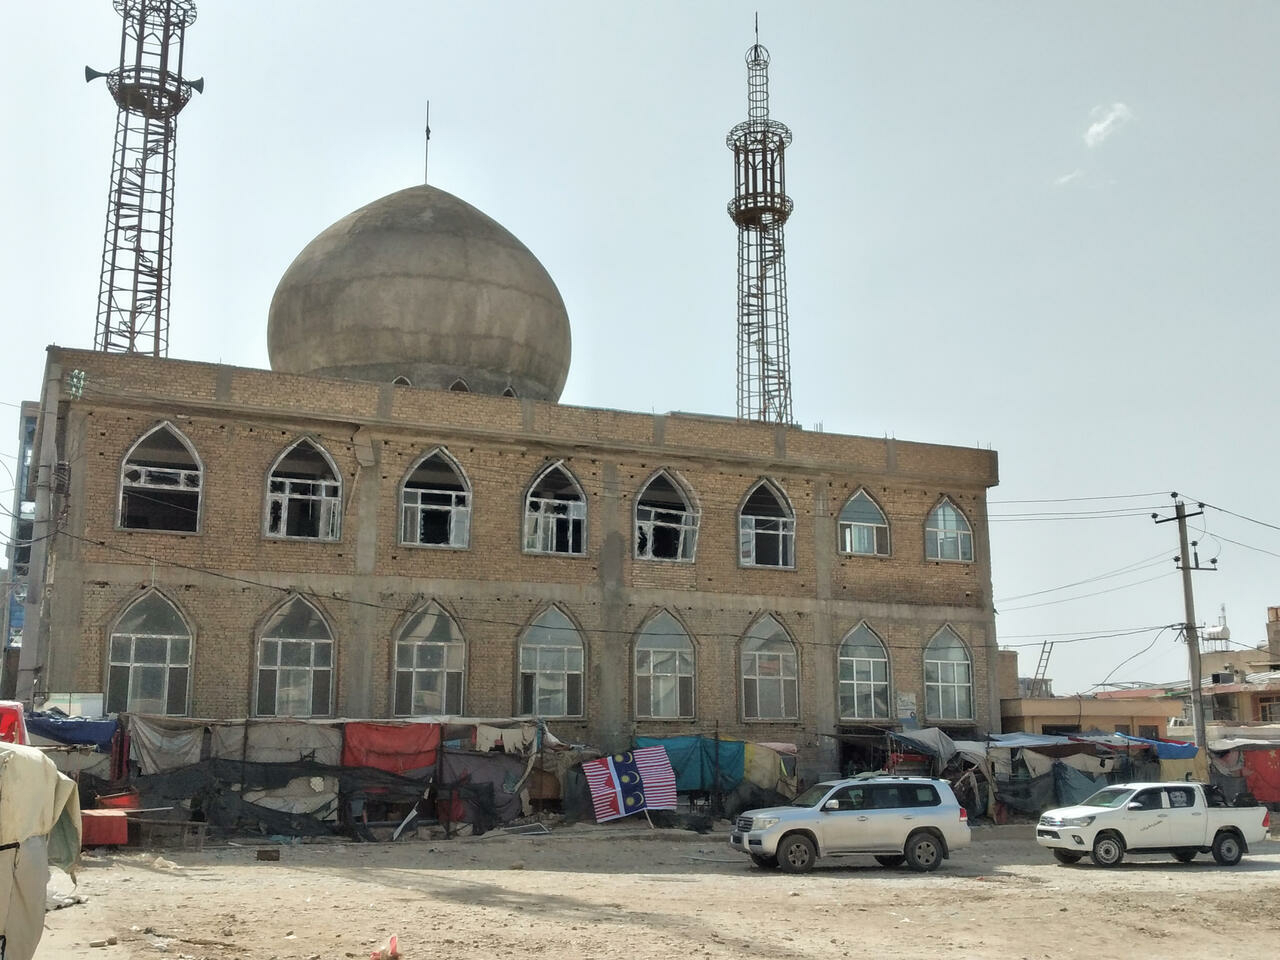 Seh Dokan mosque in Mazar-i-Sharif, Afghanistan